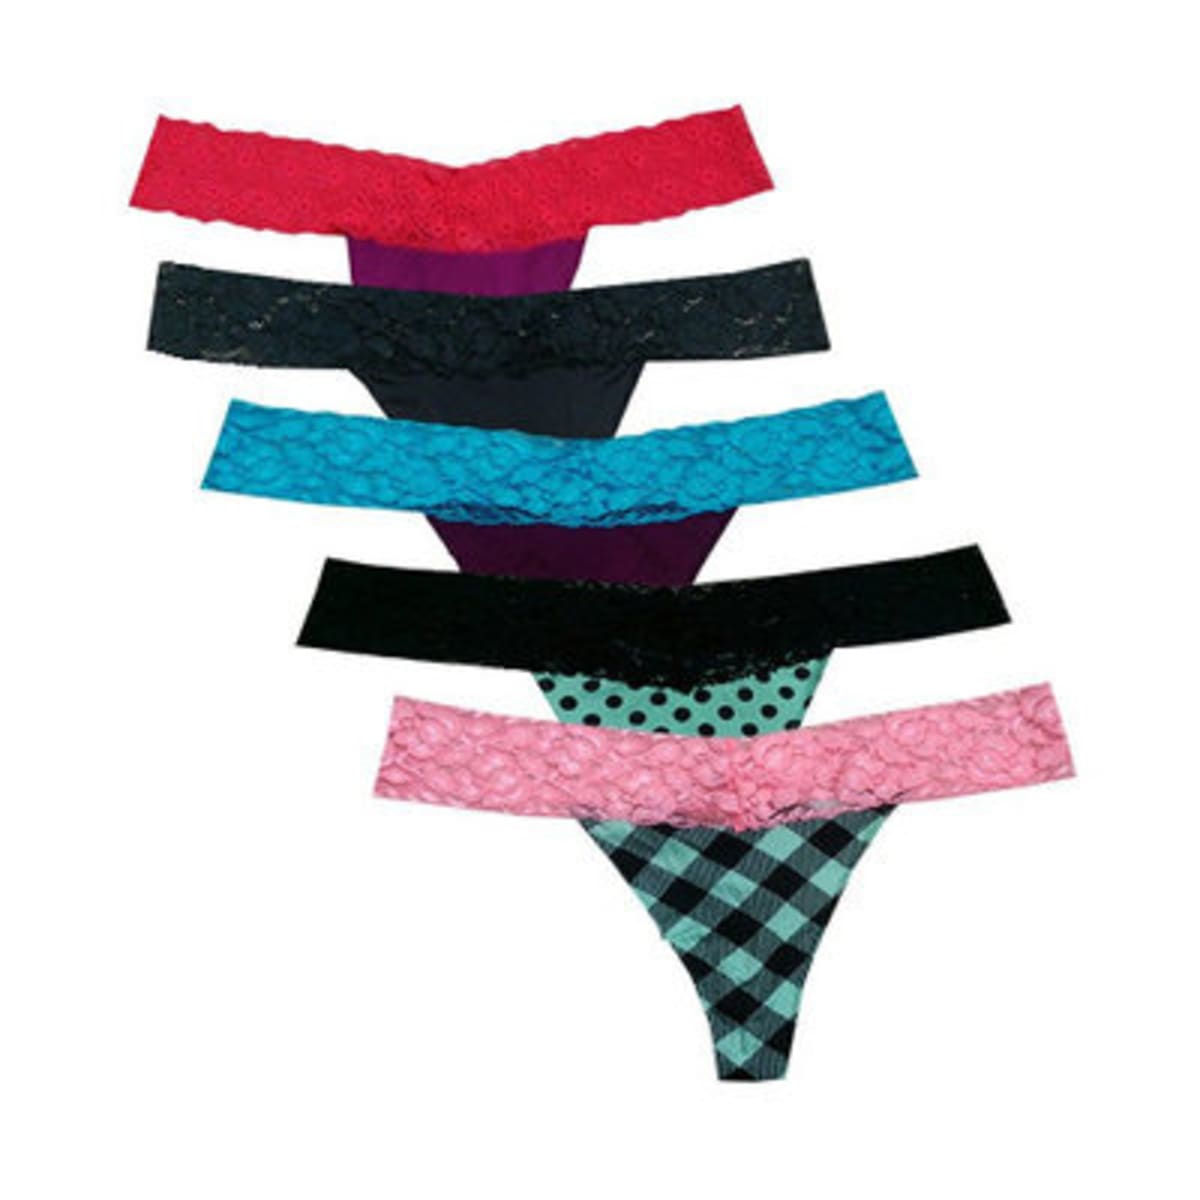 Women's Waist Lace Thong Panties - Pack of 5